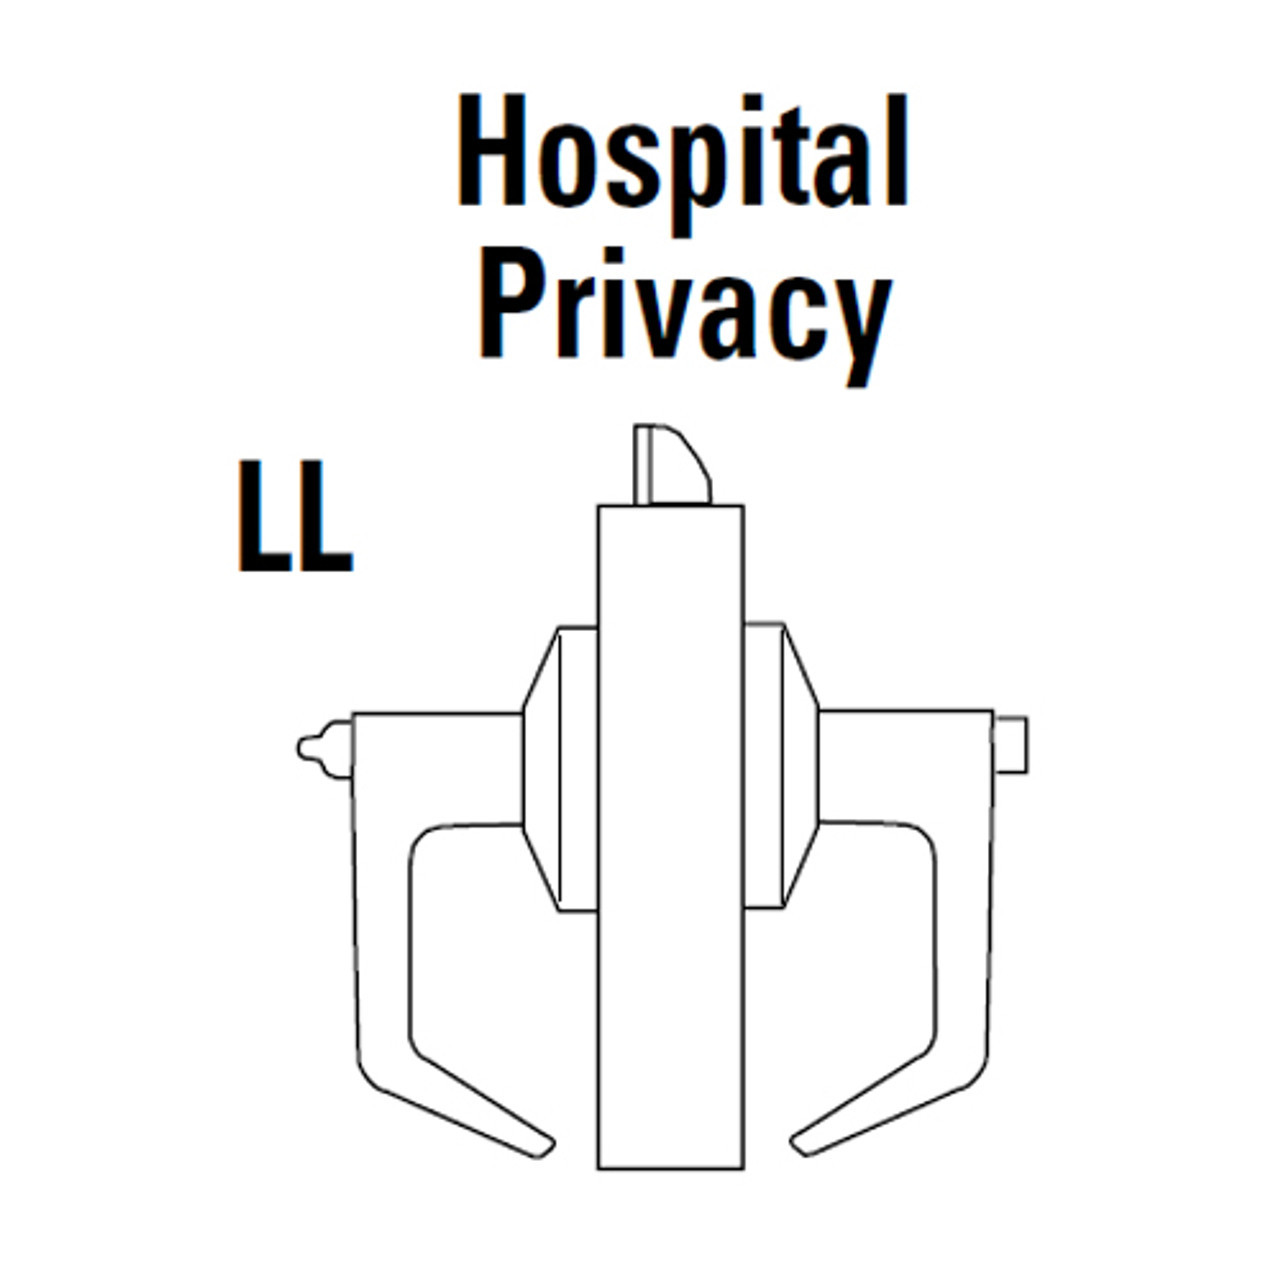 9K30LL14LSTK690LM Best 9K Series Hospital Privacy Heavy Duty Cylindrical Lever Locks in Dark Bronze